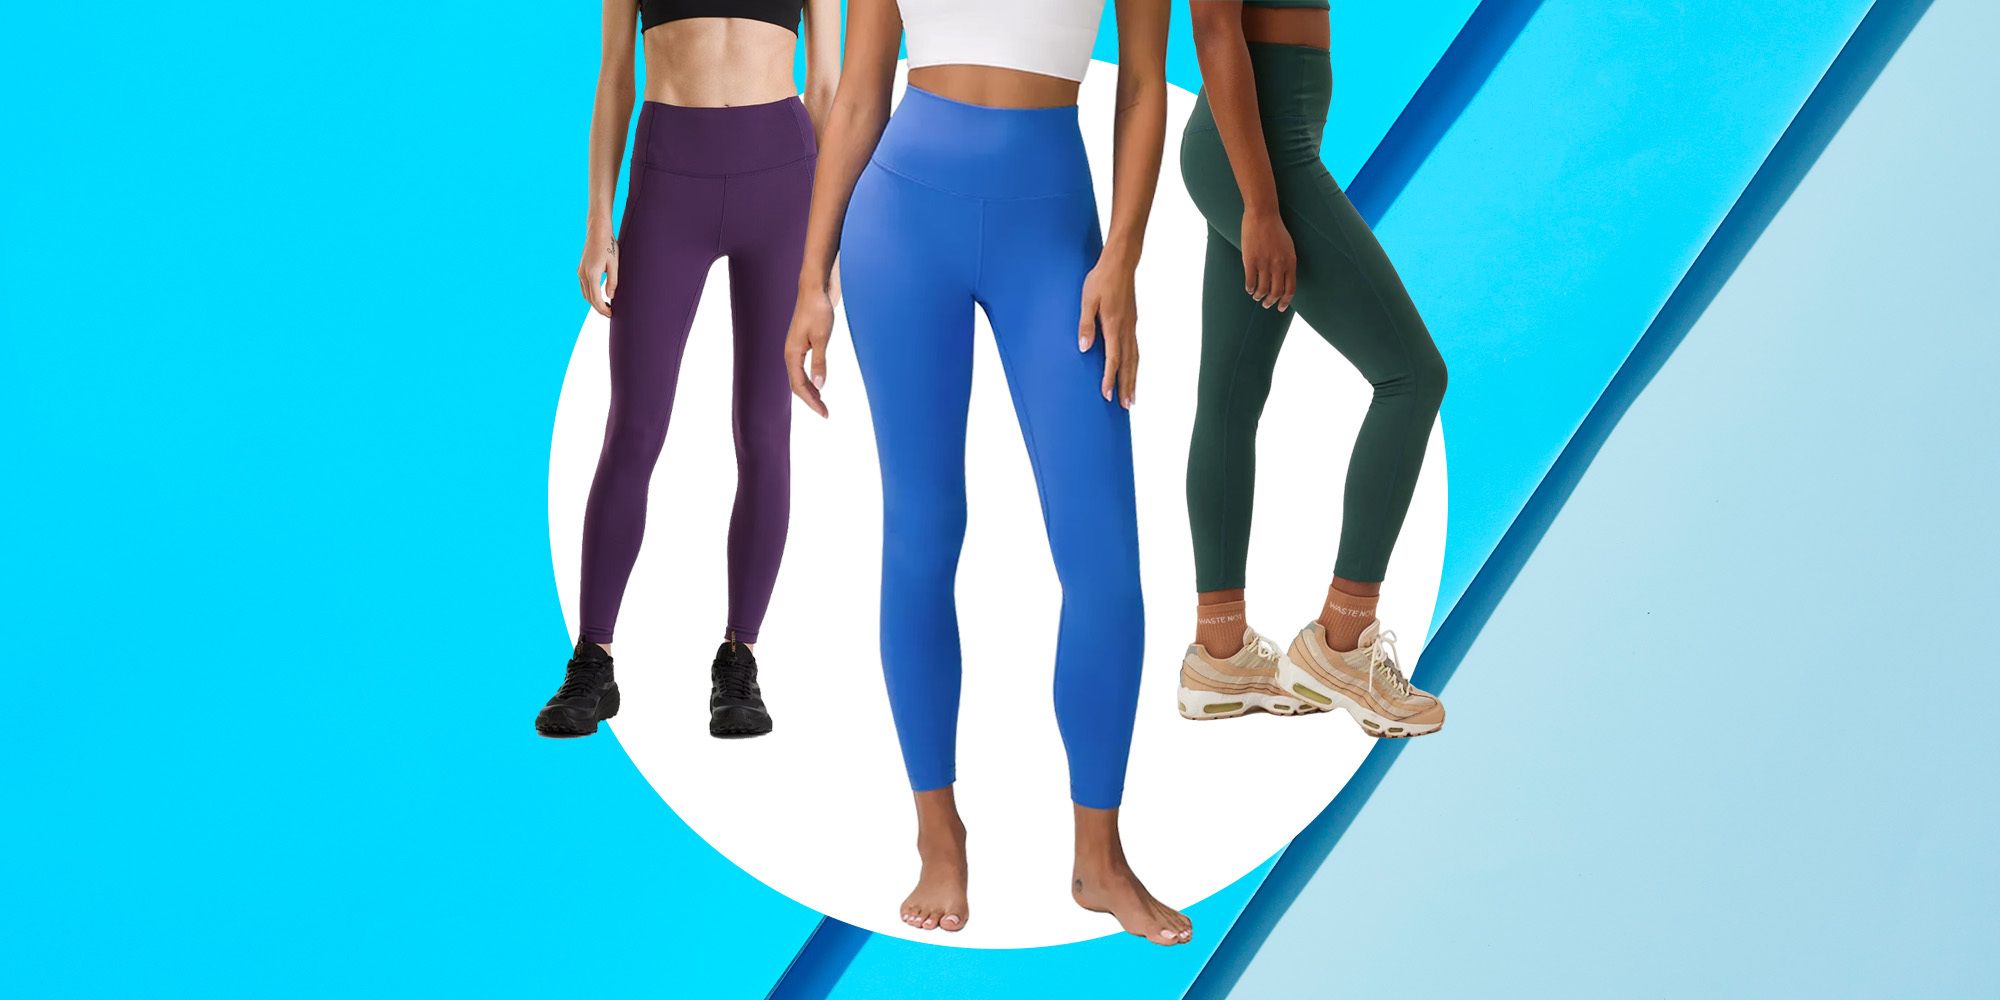 COOLOMG Women's Yoga Long Pants Compression Drawstring Running